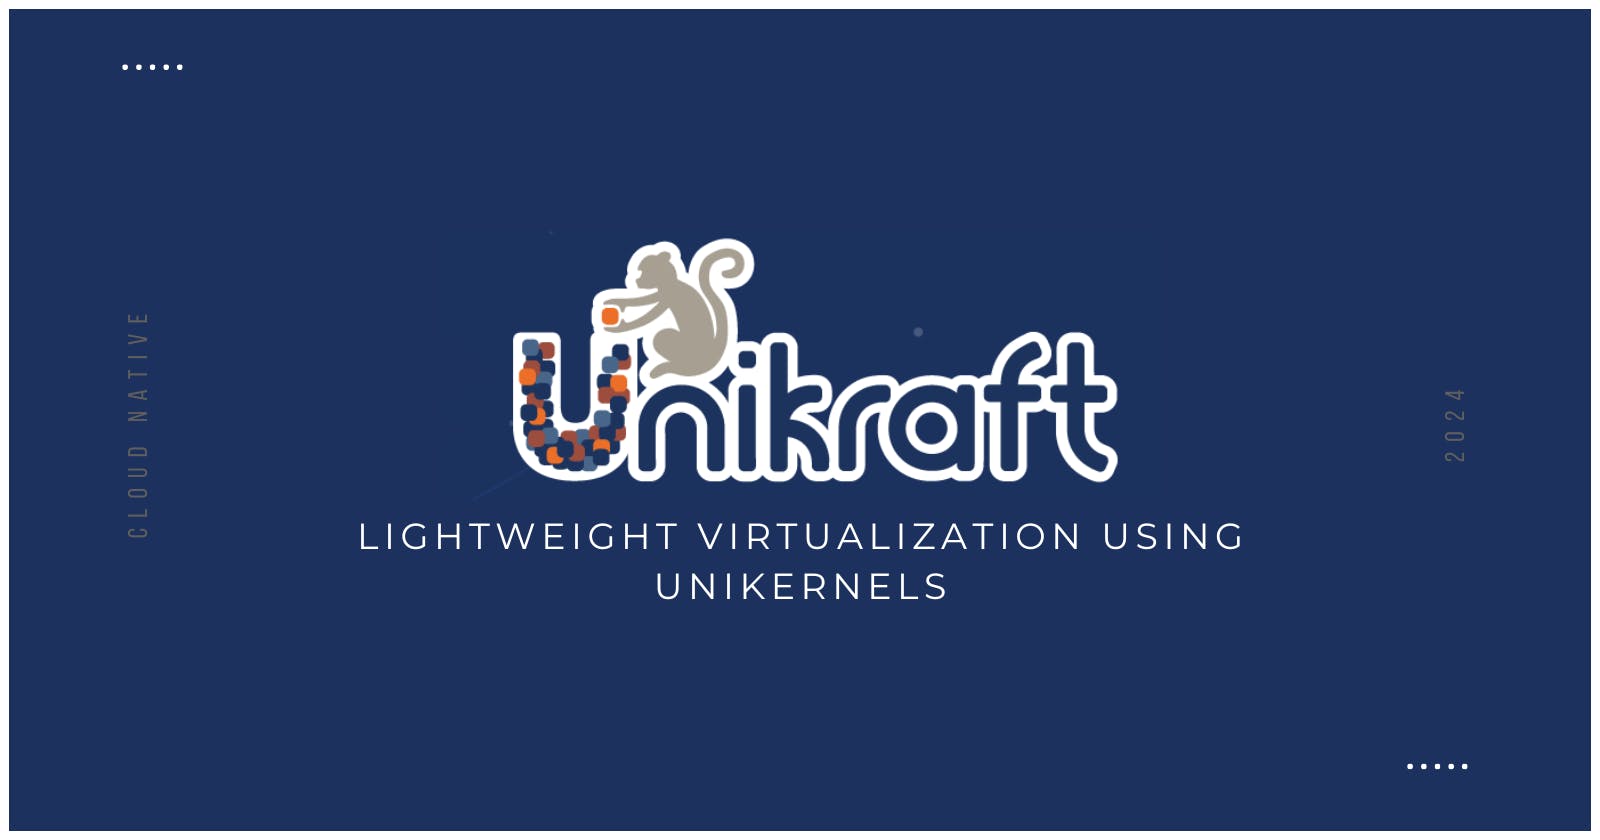 Introducing Unikraft - Lightweight Virtualization Using Unikernels